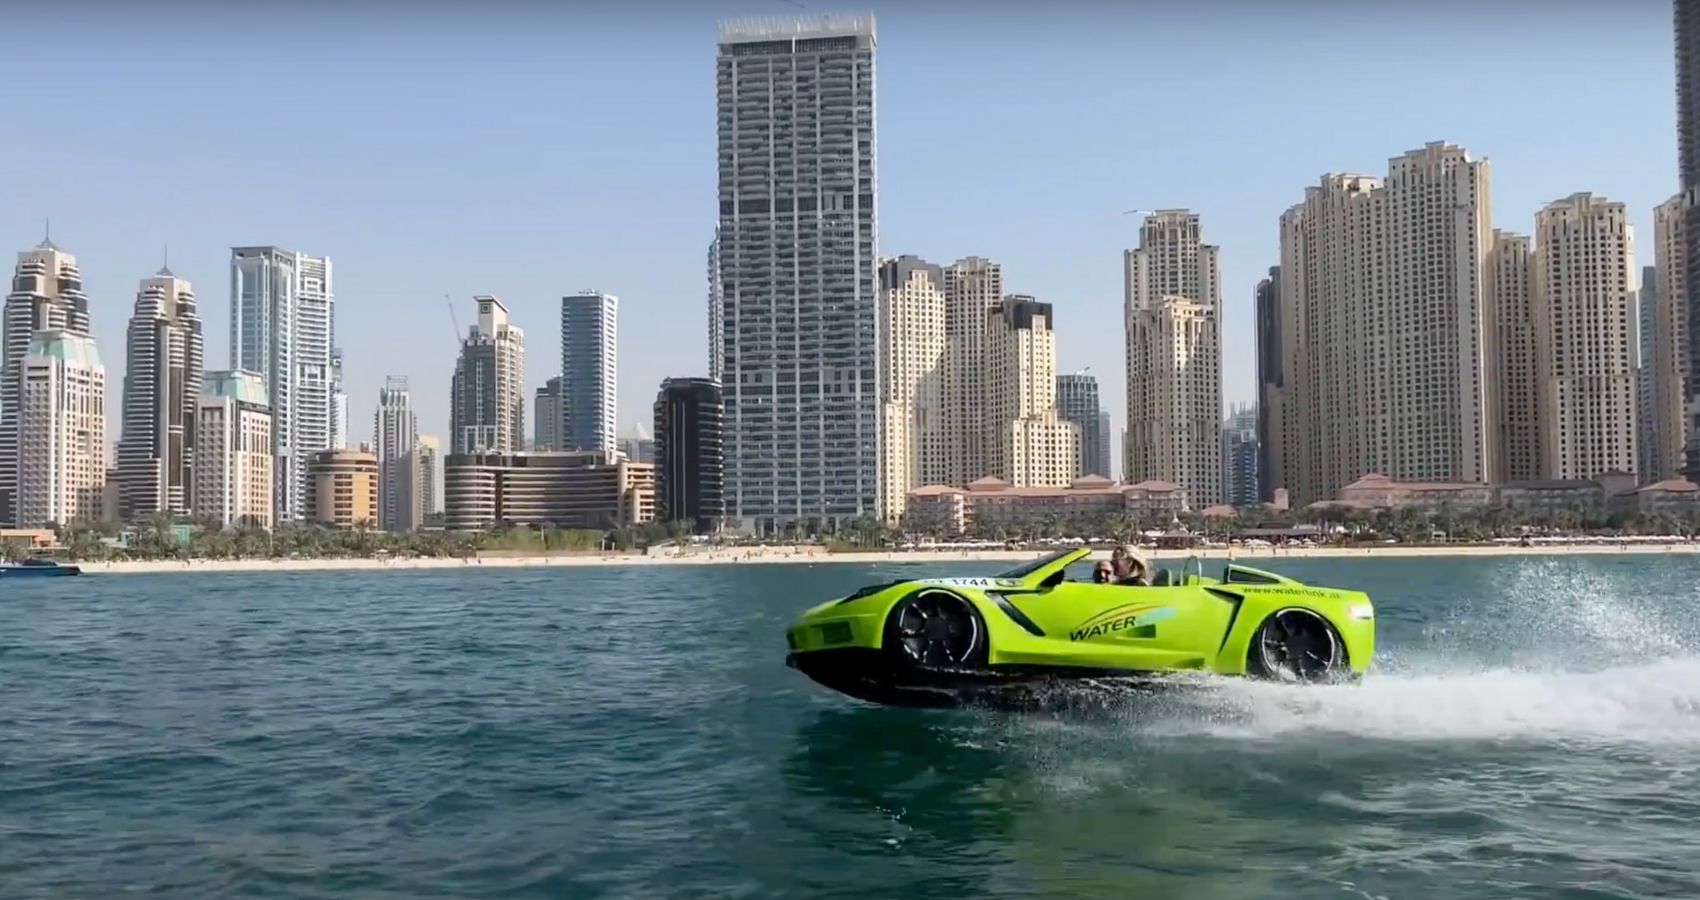 green Ferrari corvette jet boat car